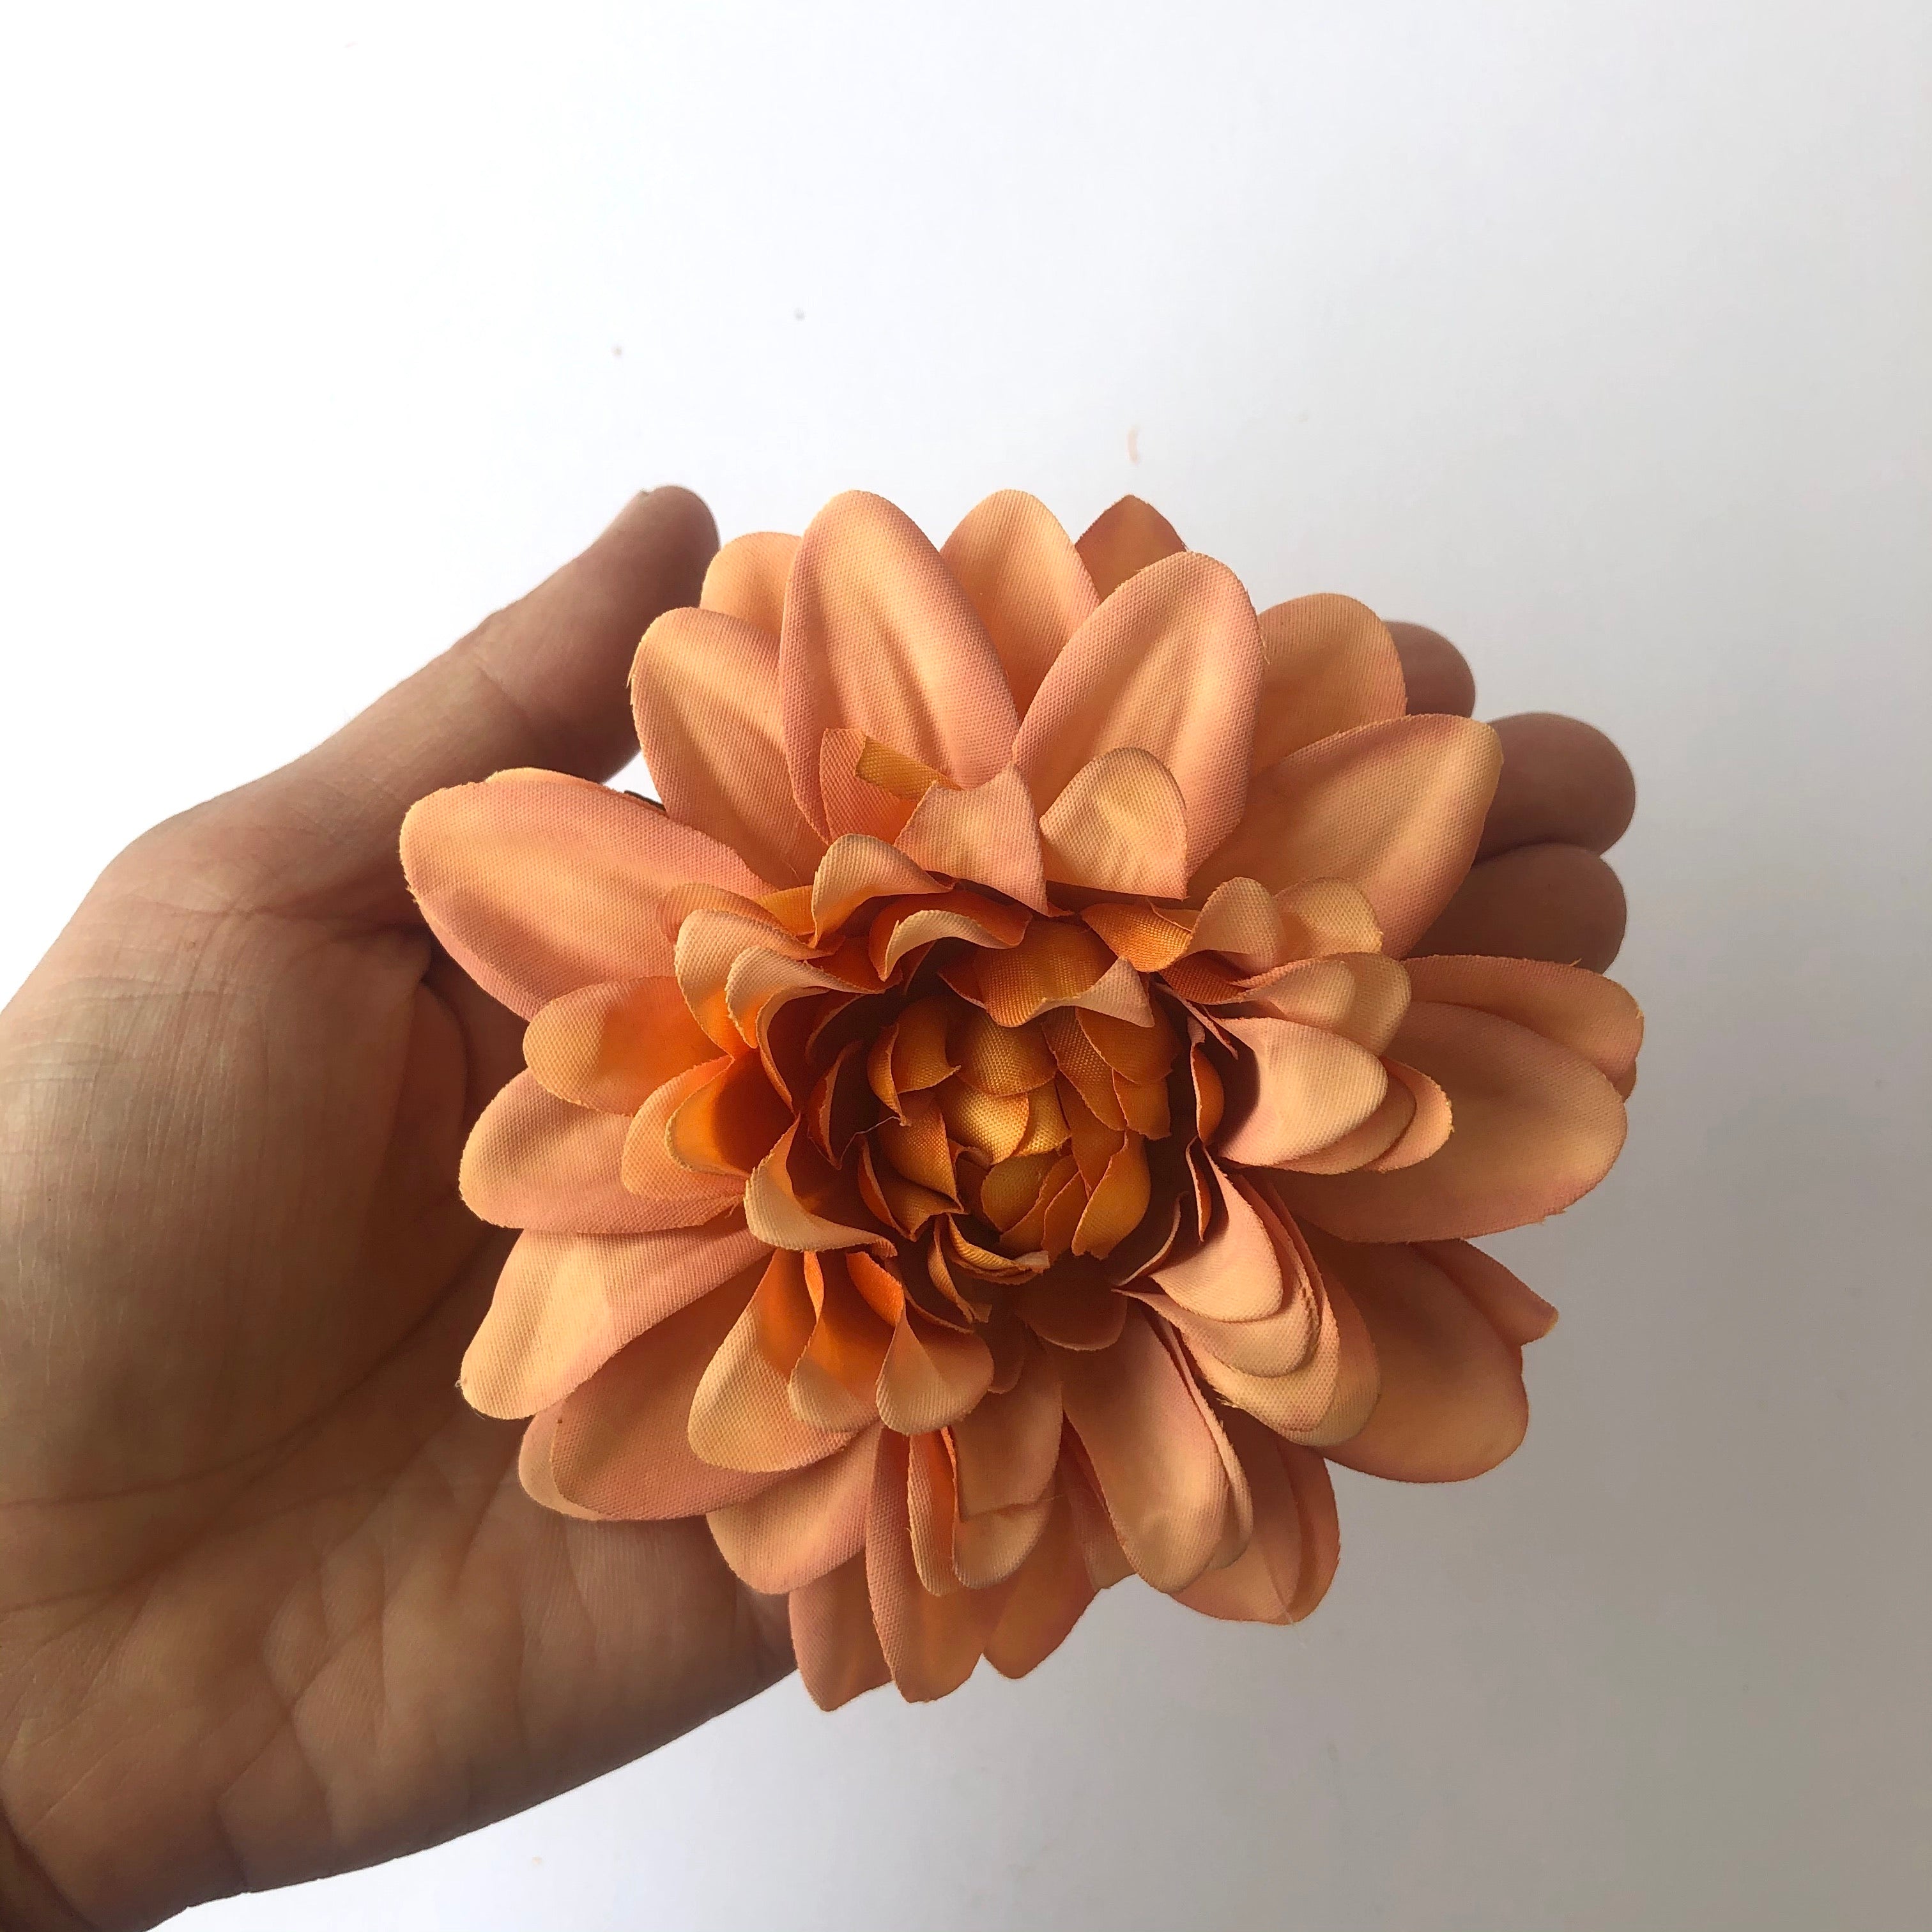 Artificial Silk Flower Heads - Vintage Orange Chrysanthemum Style 15 - 1pc